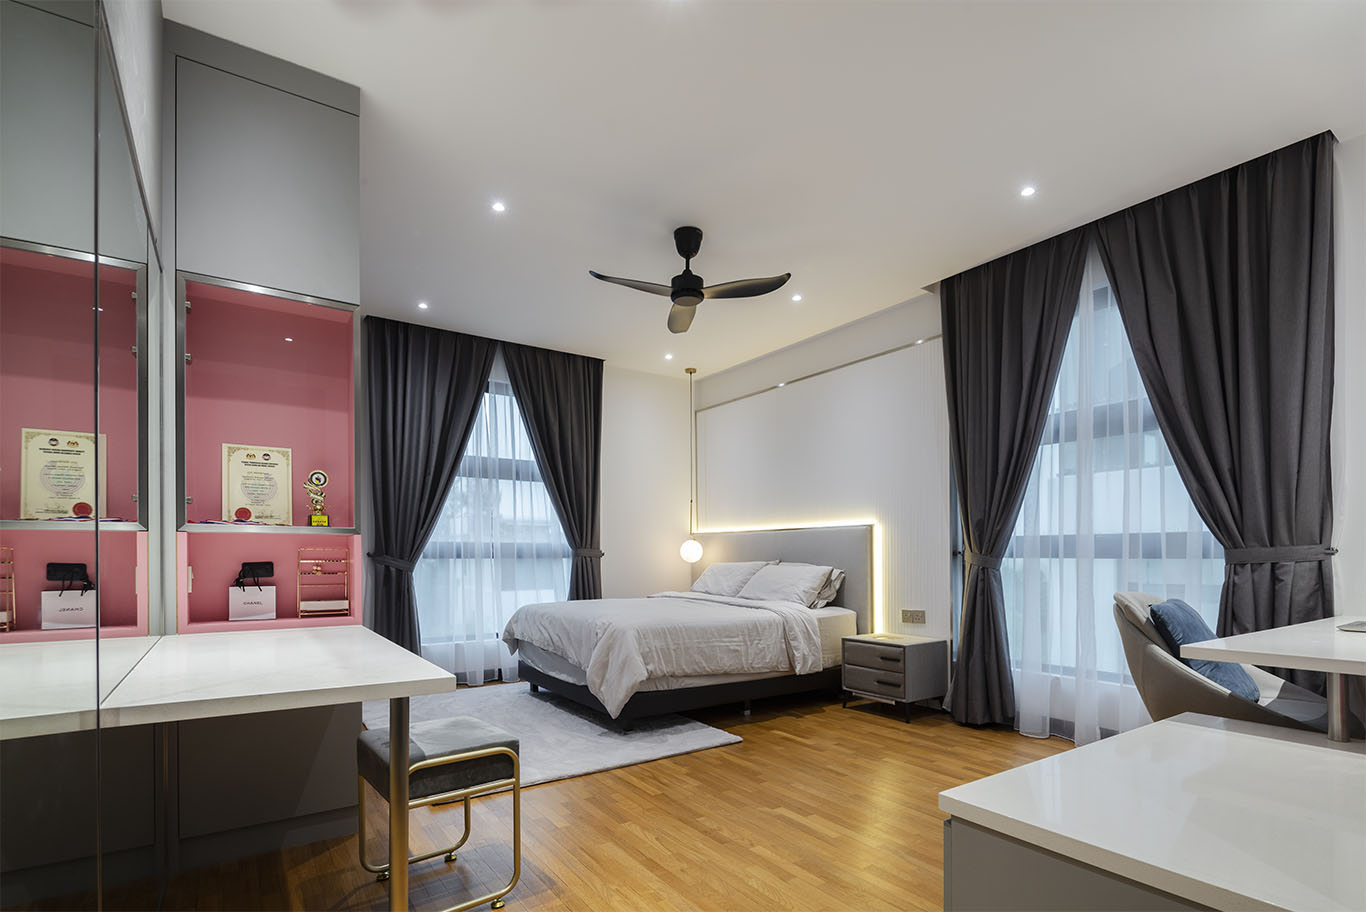 MIEUX La Famillie De Lee modern bedroom design with hidden curtain and wooden floor 5 mieux interior design